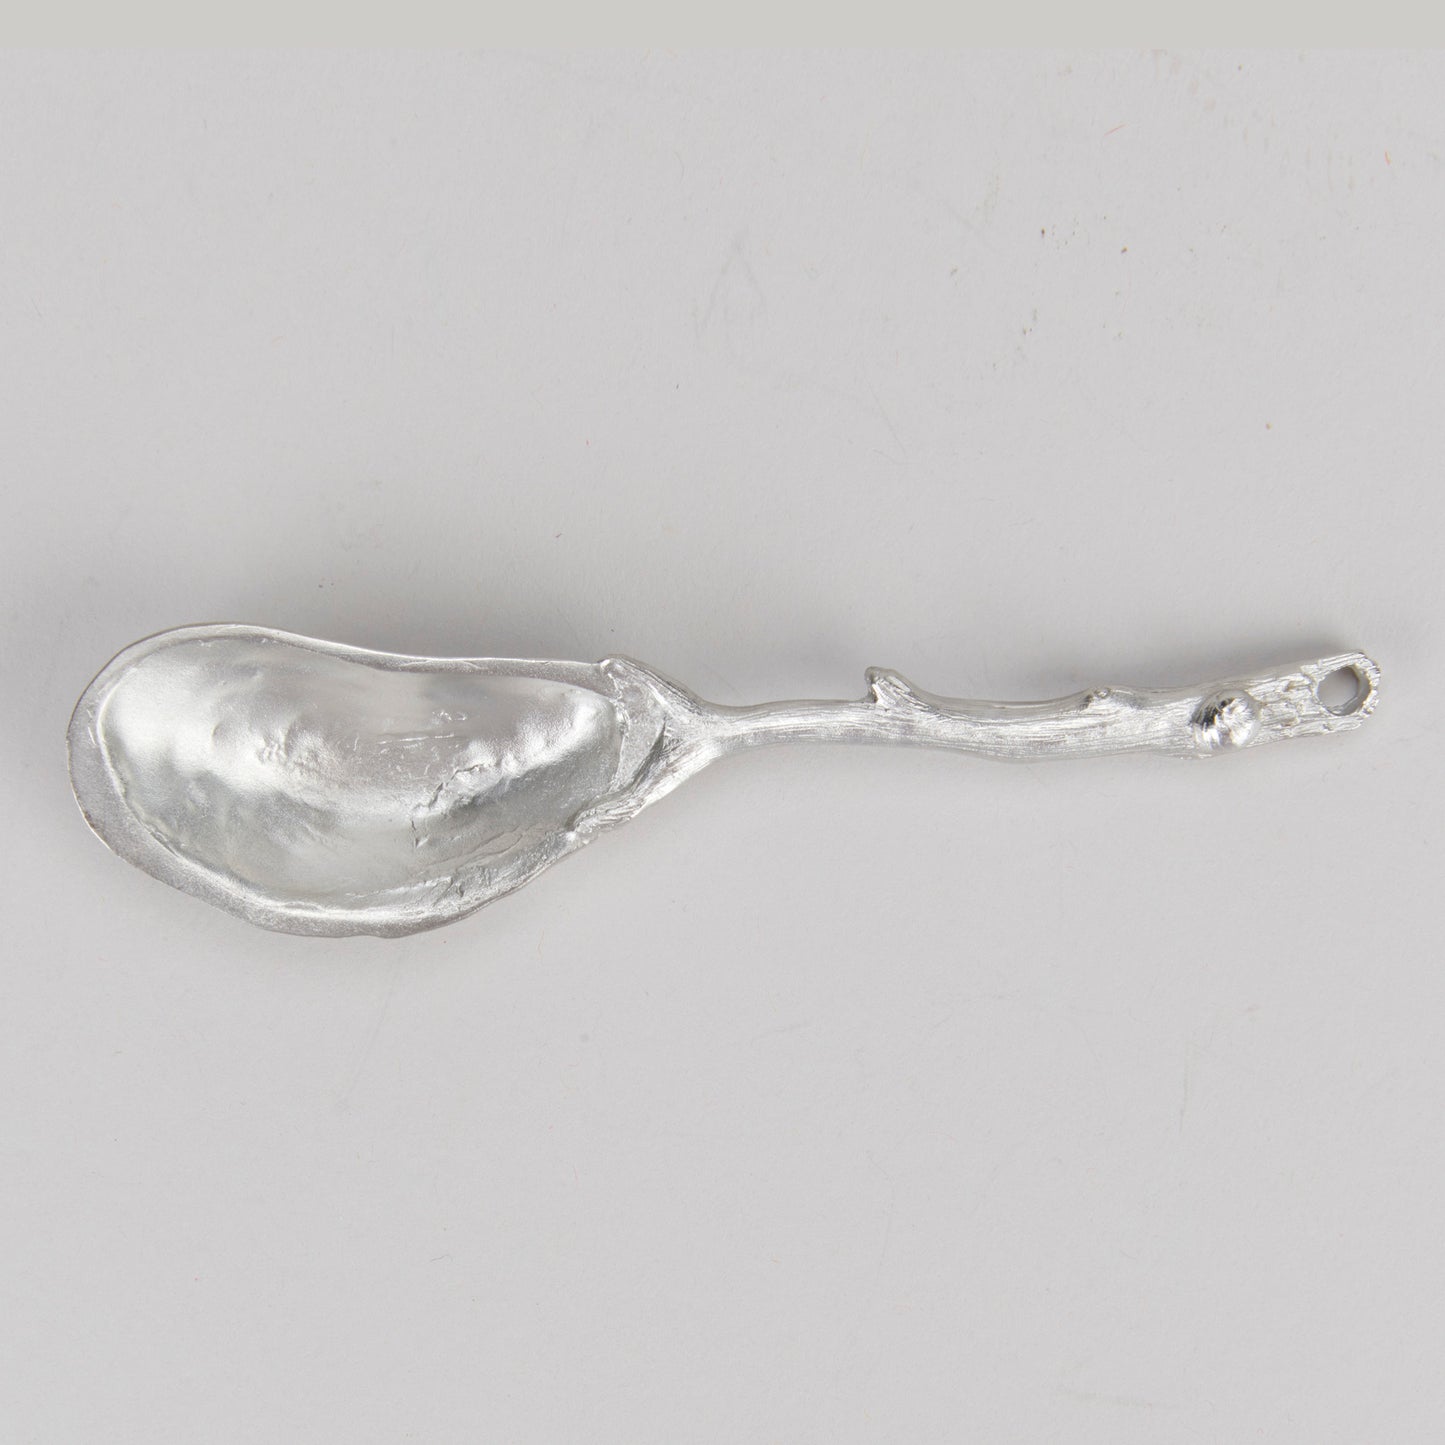 Set of 4 Mussel Measuring Spoons-Pewter